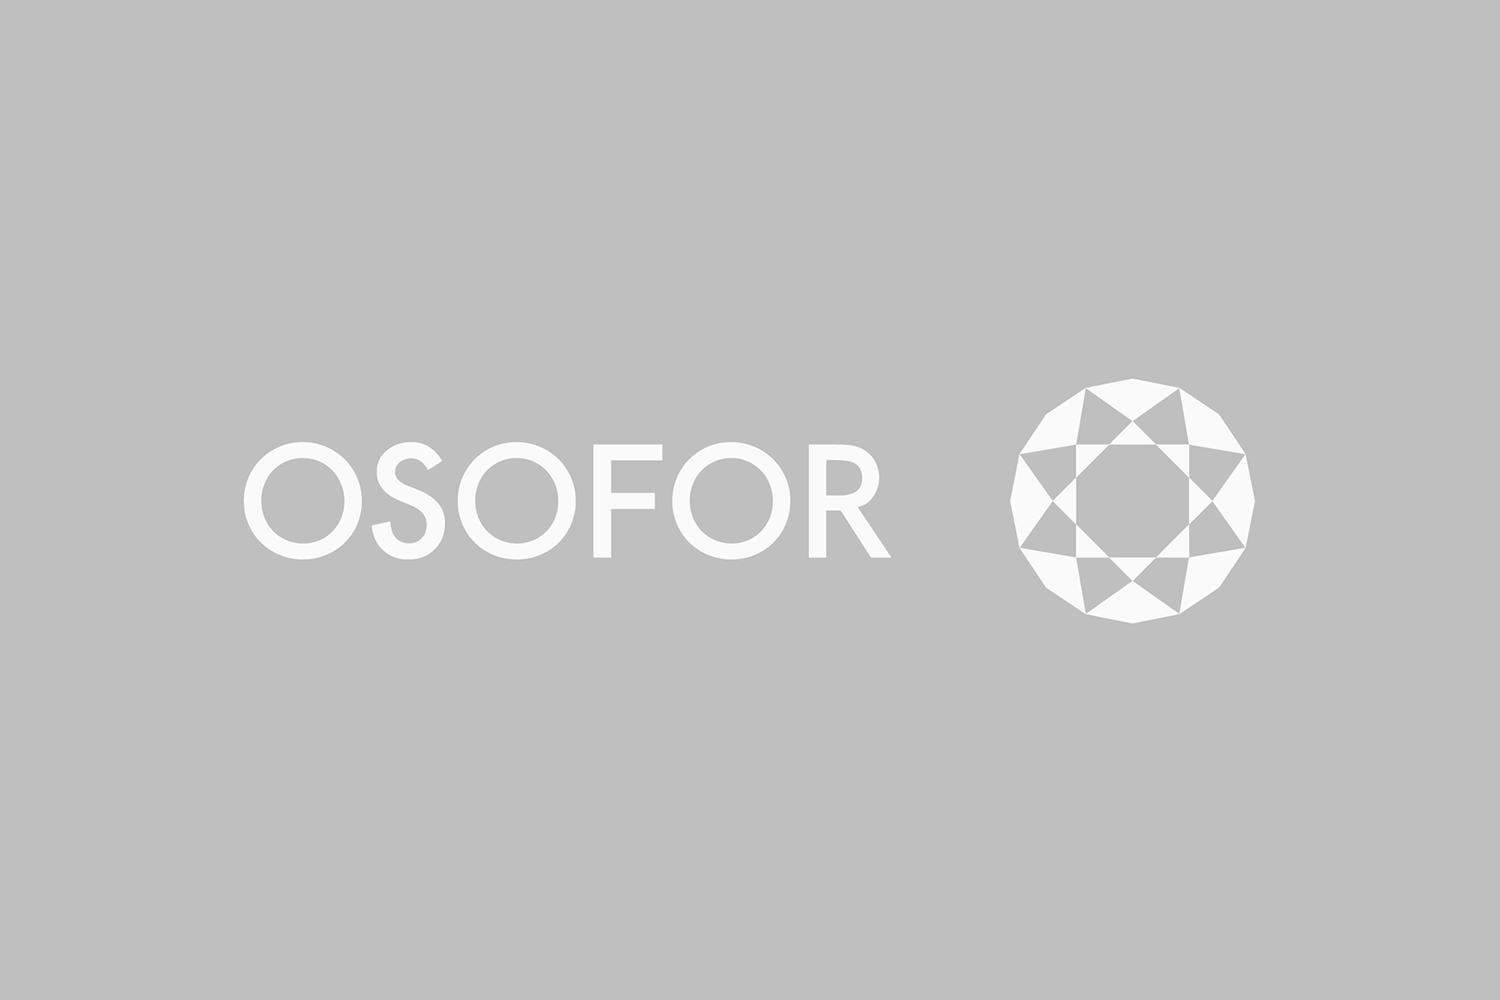 Logo design by Paul Belford Ltd. for lab diamond business Osofor